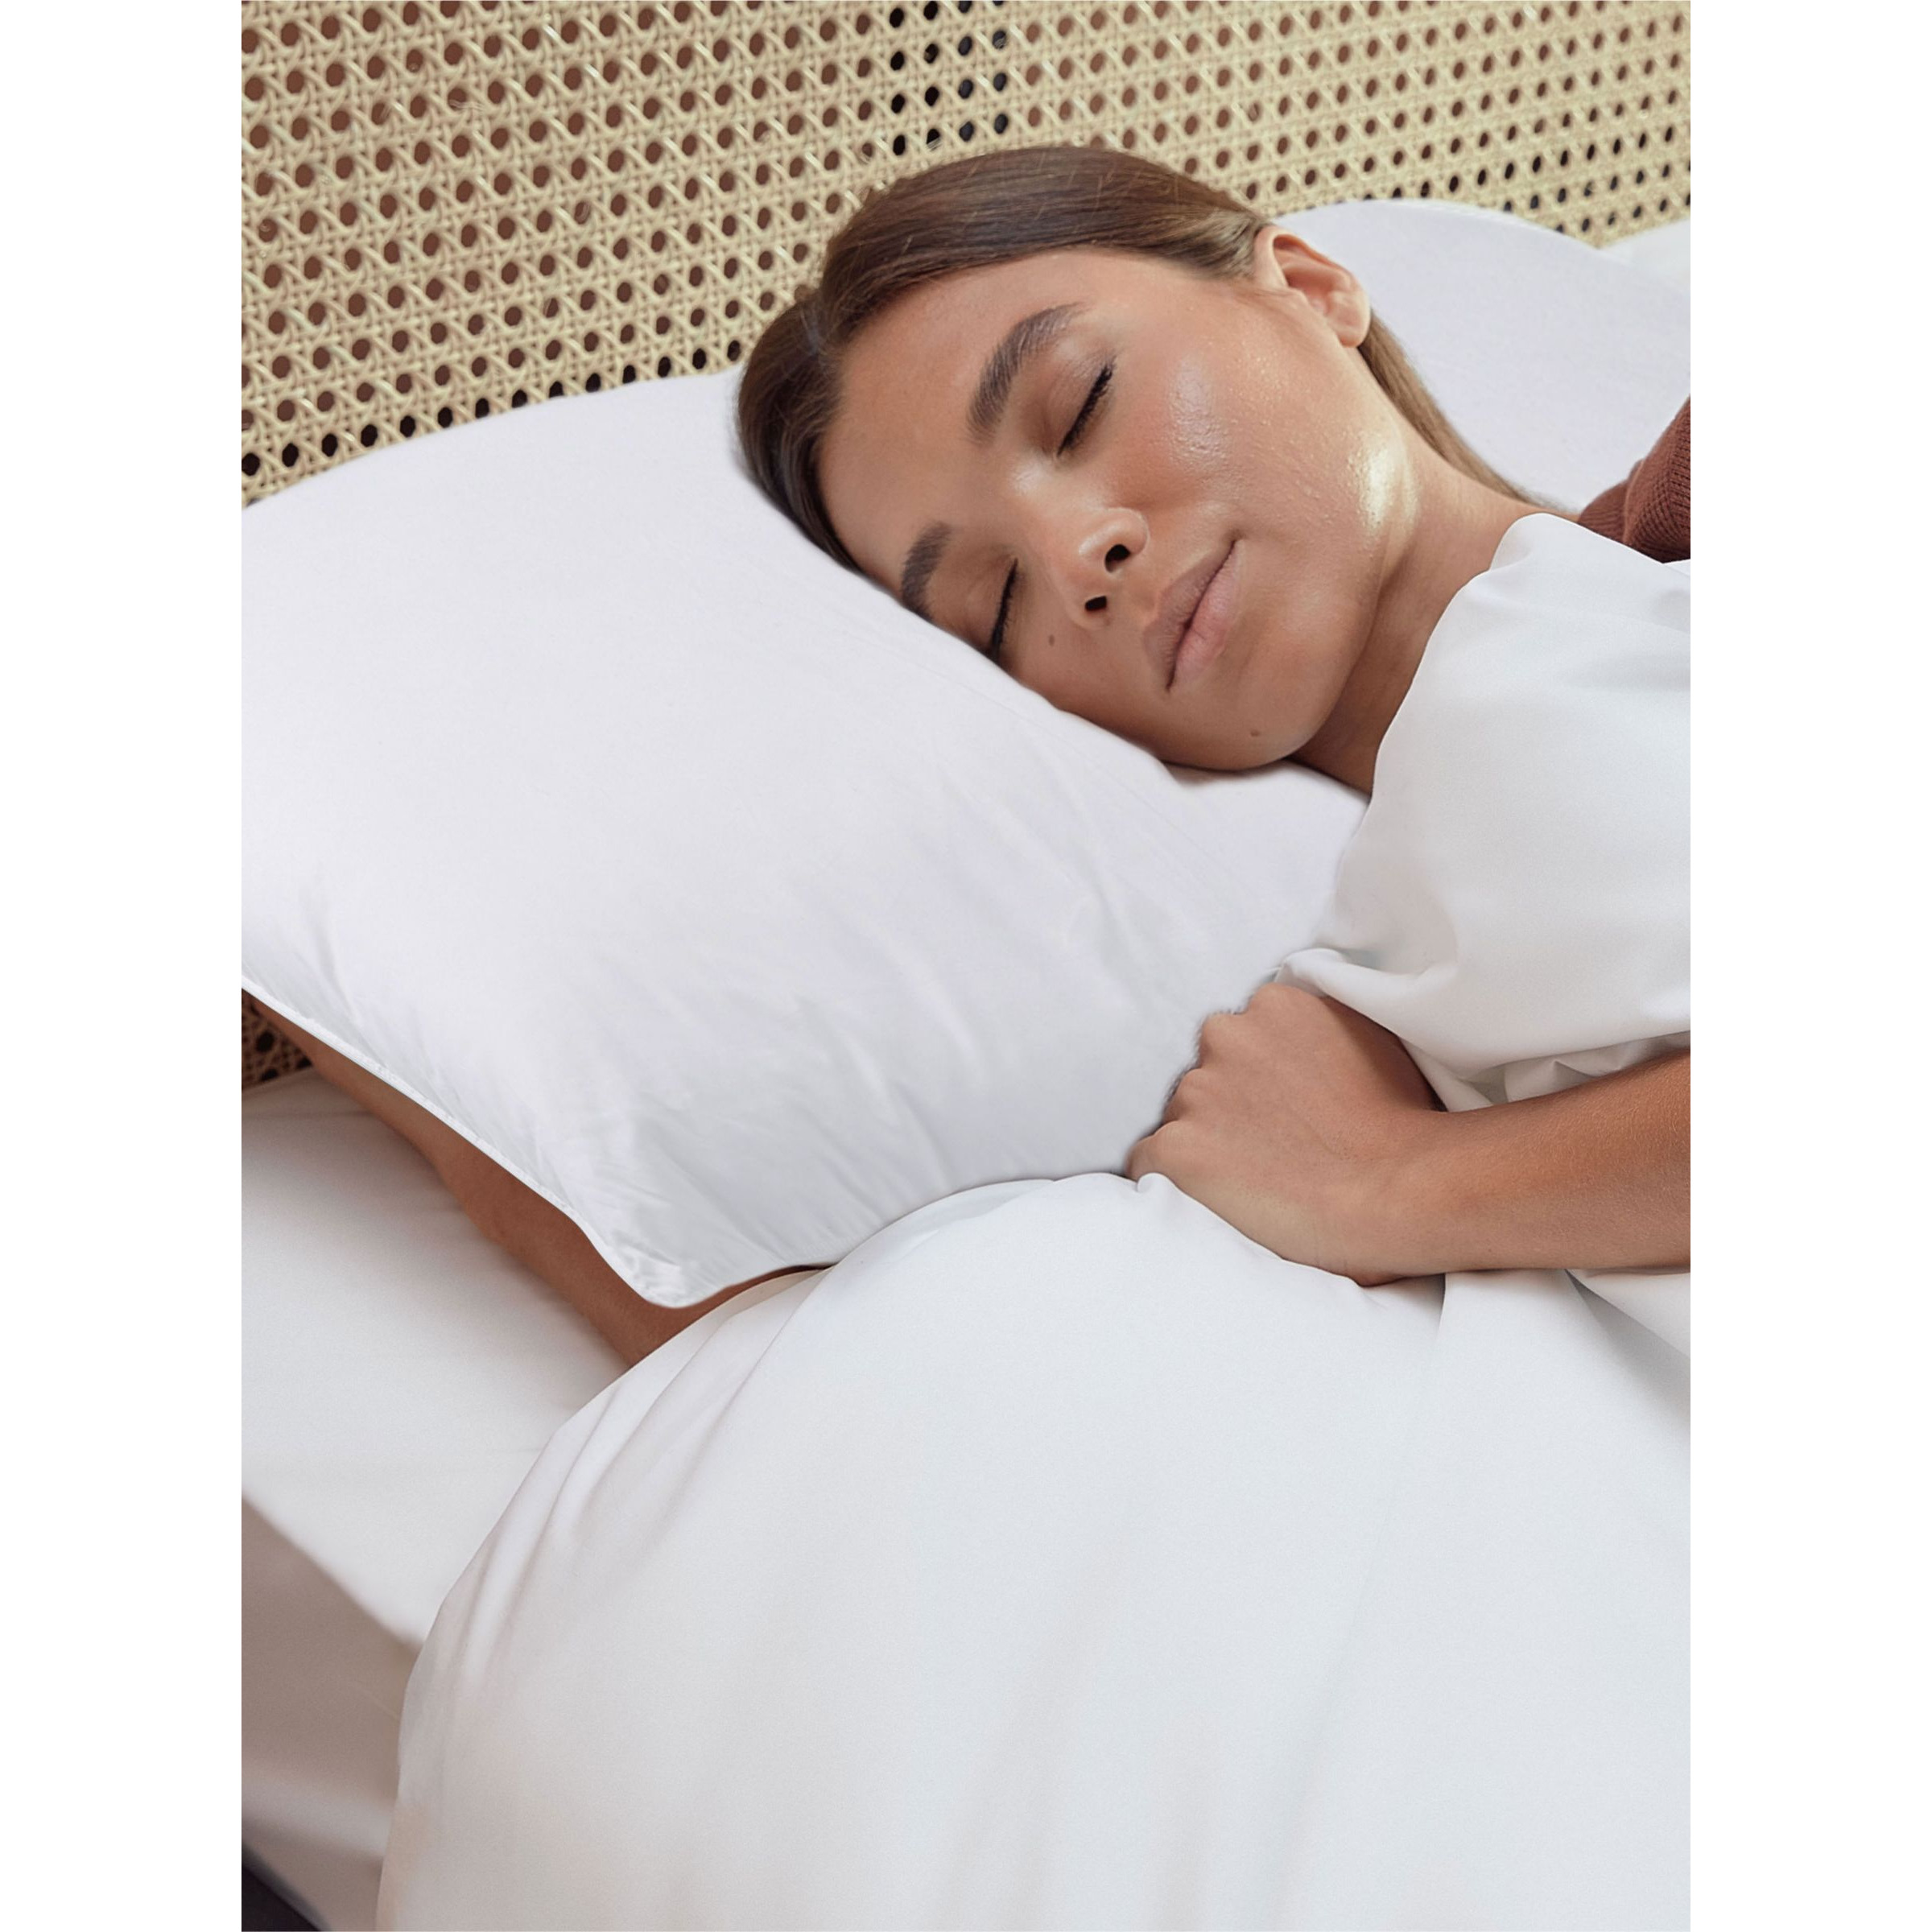 Kally Sleep Feels Like Down Standard Pillows, Soft/Medium, Set of 2 - image 1